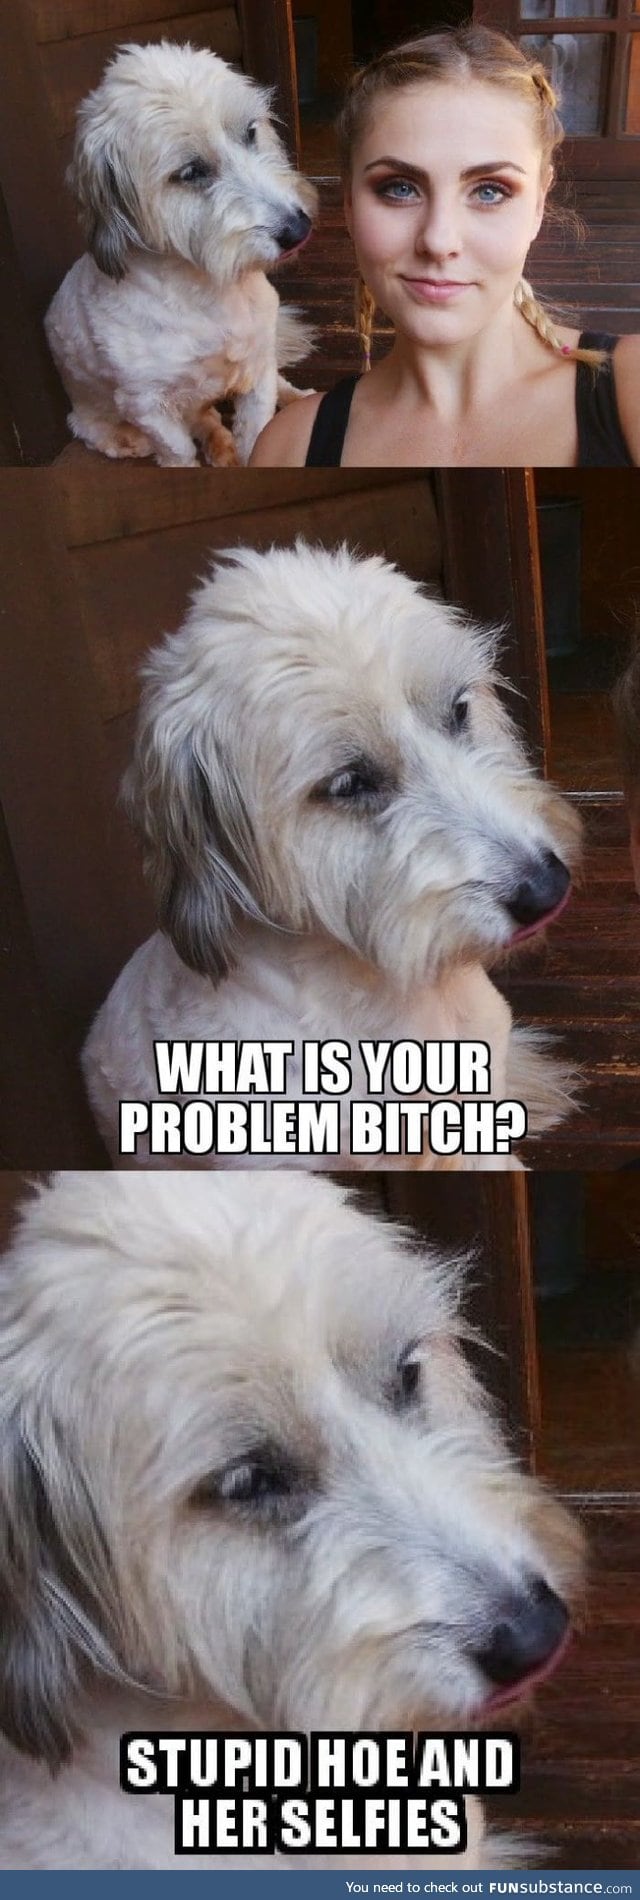 Doggo disapprove